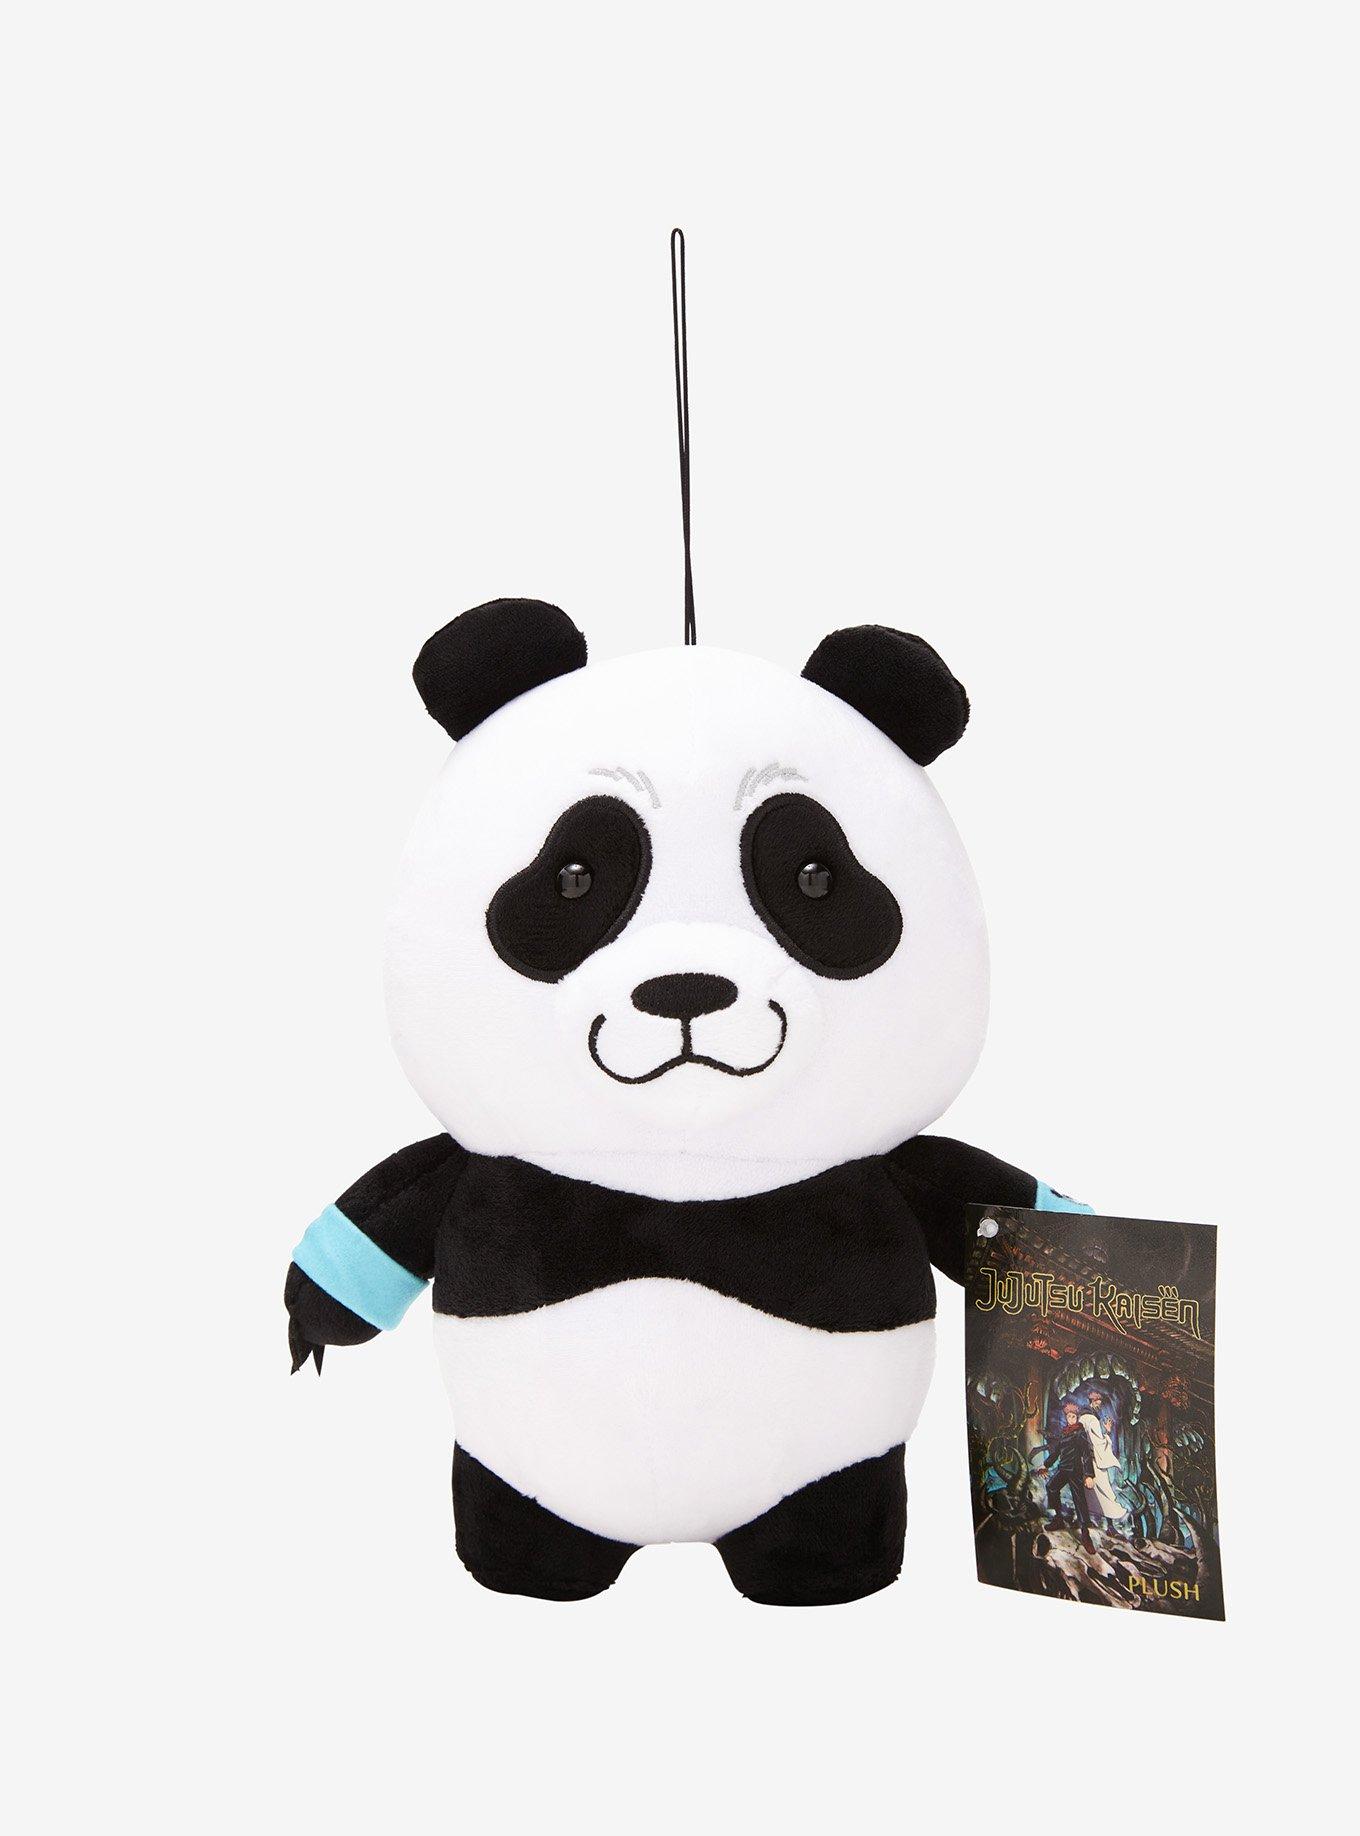 Is Panda Dead Jjk? What Happened to Panda in Jujutsu Kaisen? - News